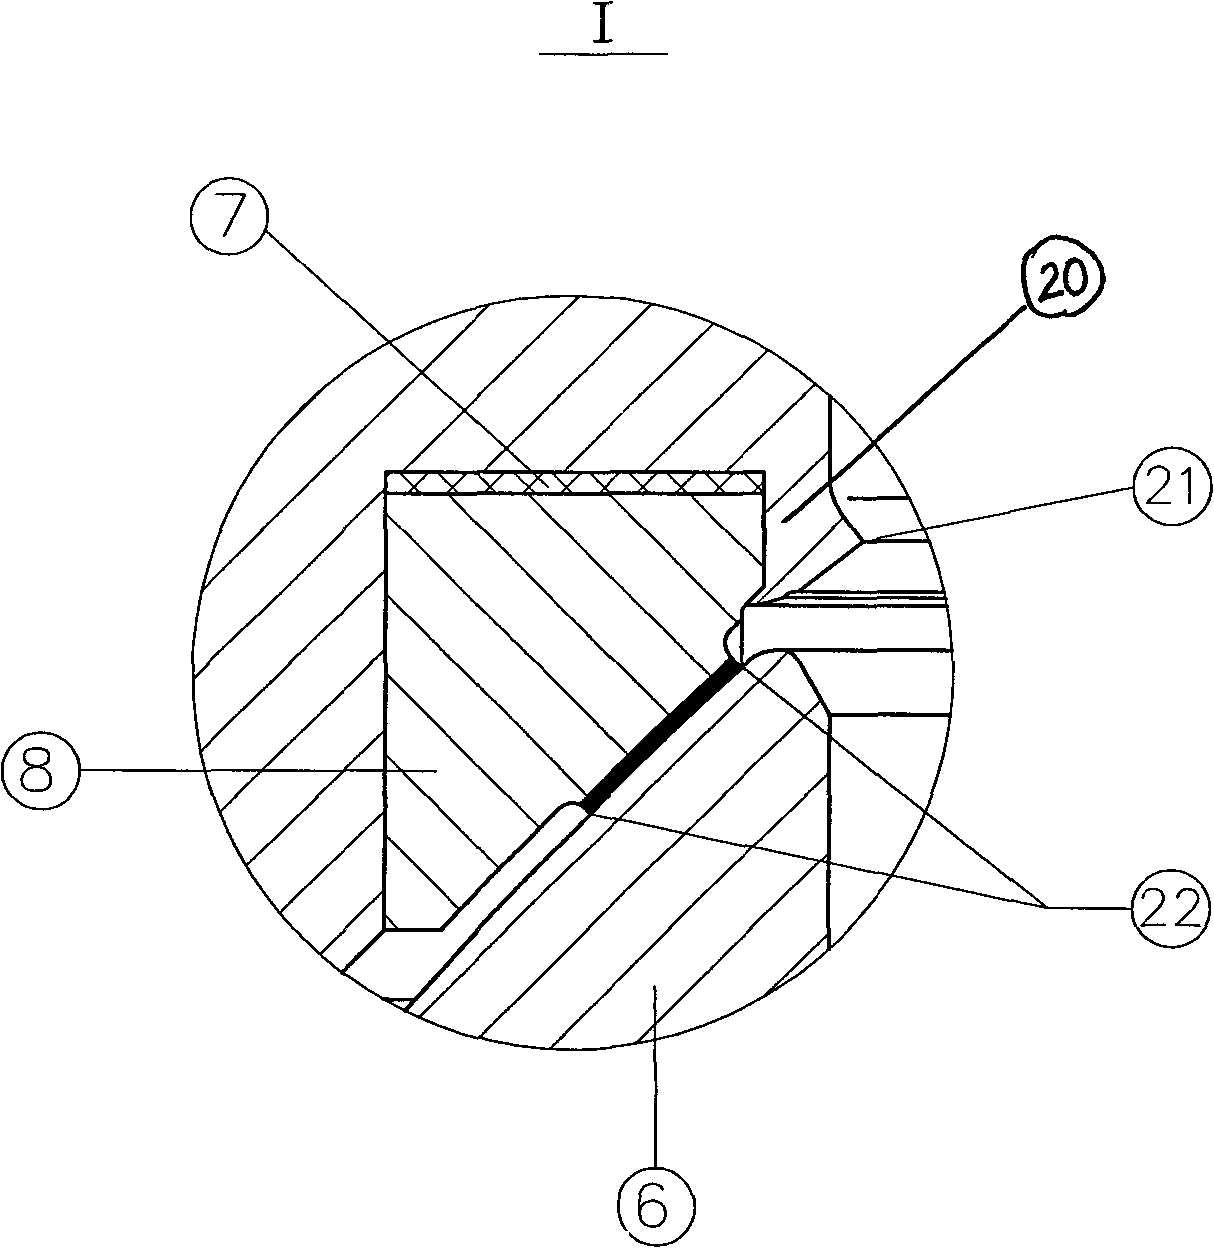 Overhead valve of pulp digester